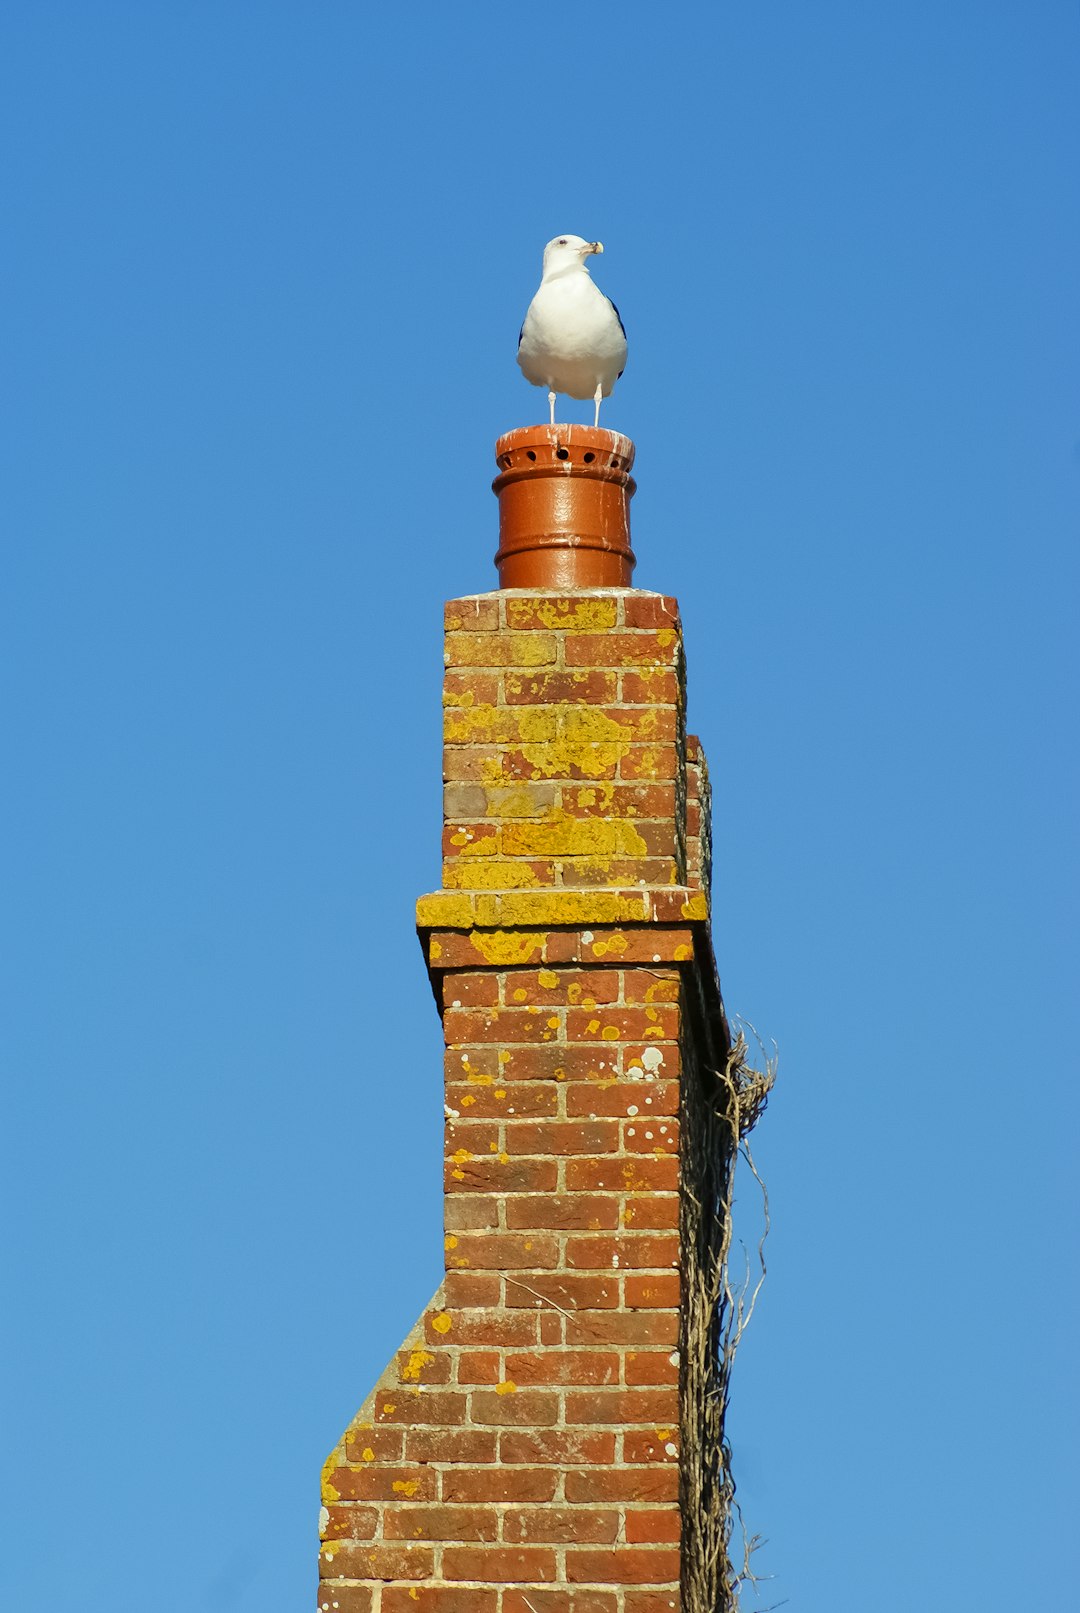  brown brick tower under blue sky during daytime chimney